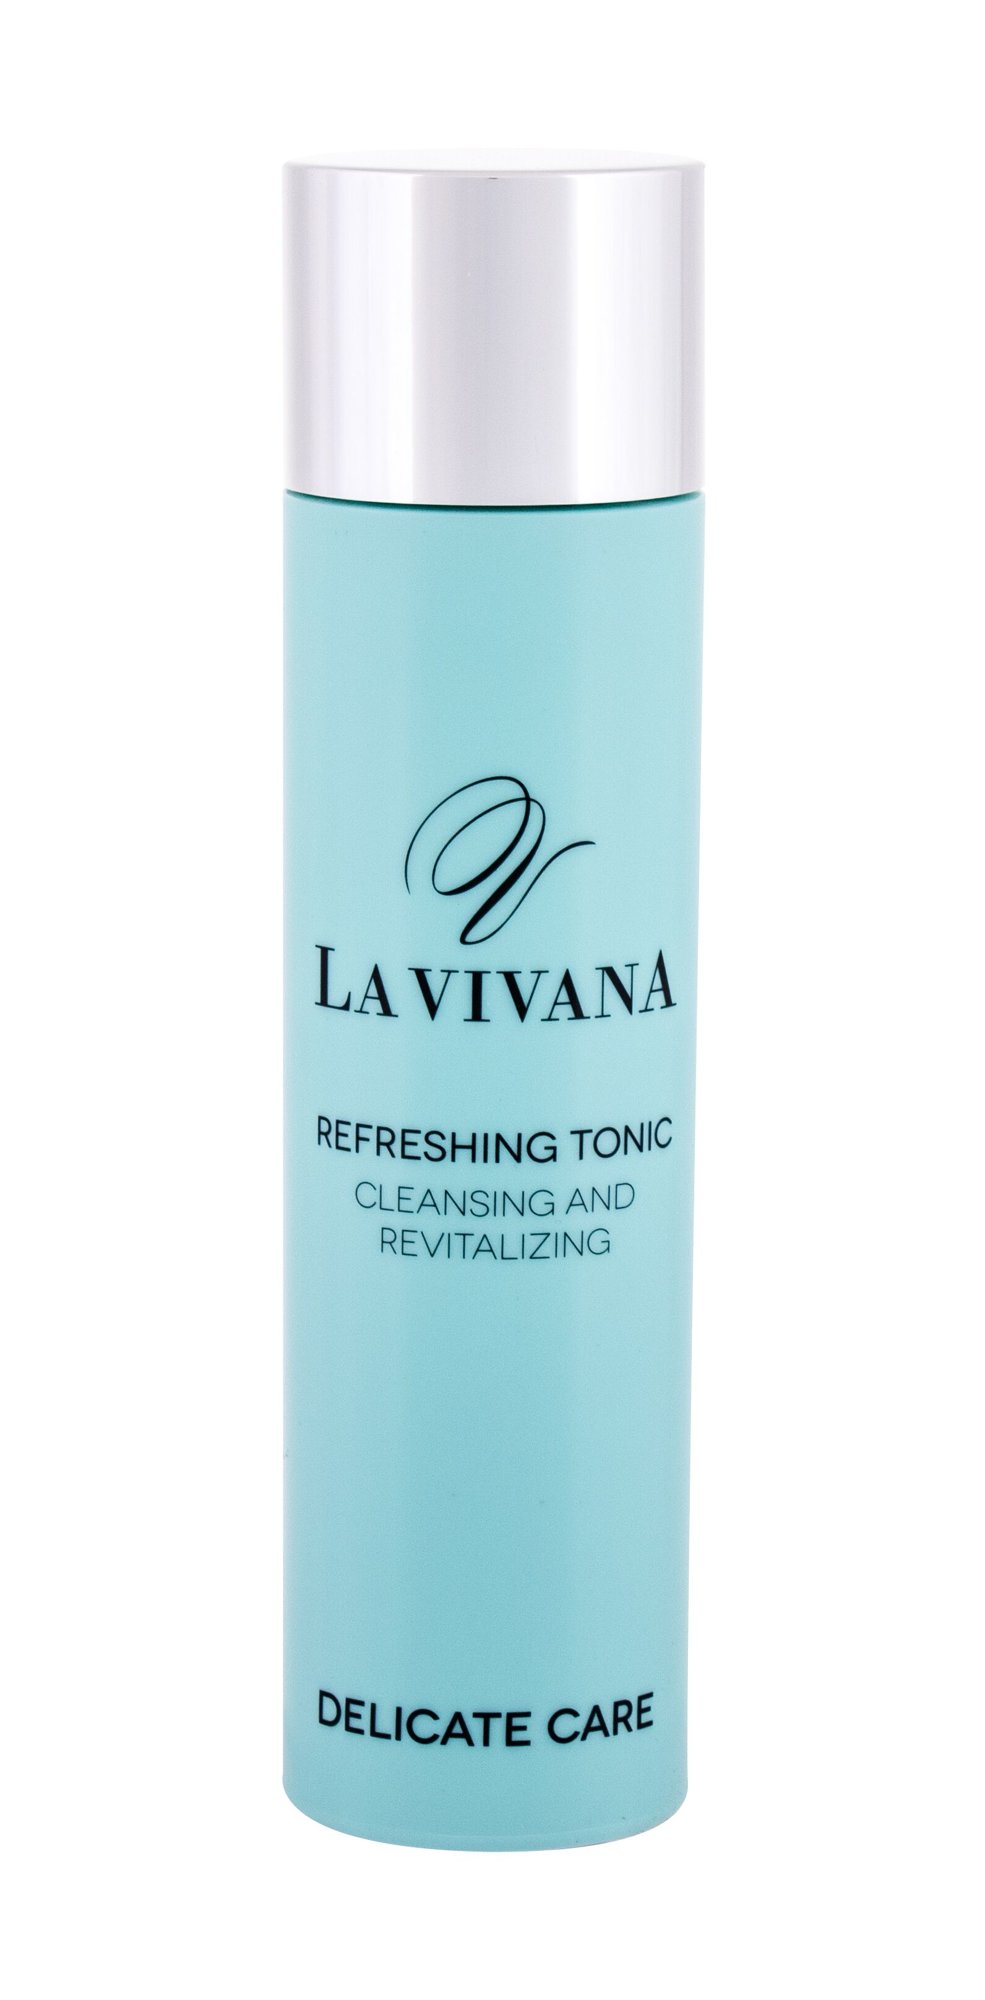 La Vivana Delicate Care Refreshing Tonic valomasis vanduo veidui